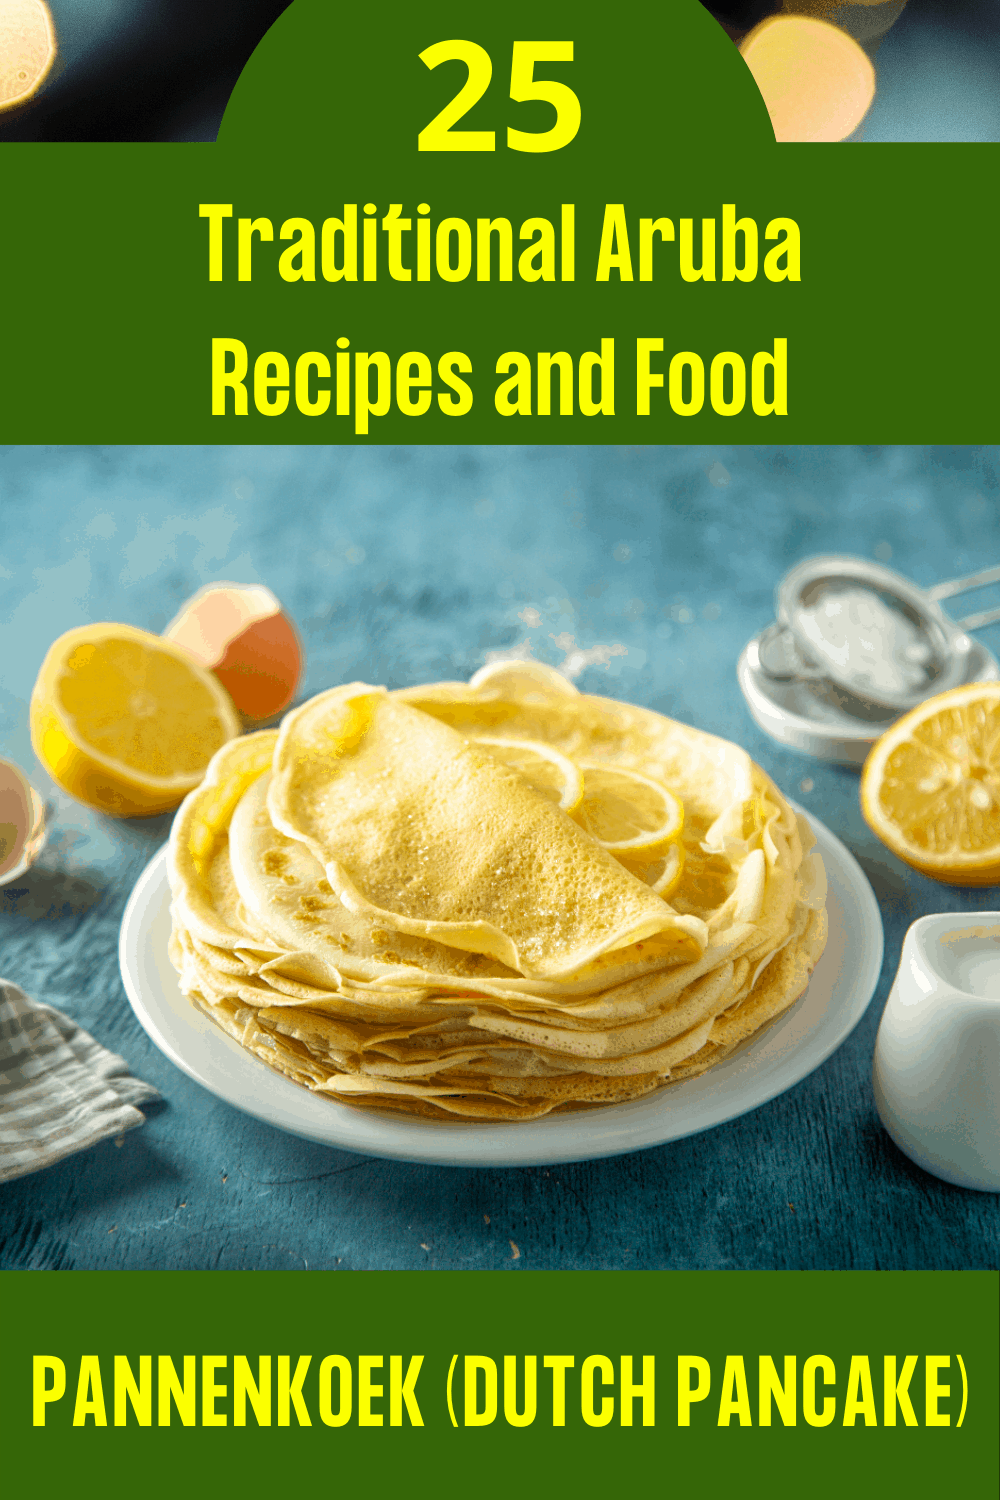 Traditional Aruban Recipes and Food -Pannenkoek (Dutch Pancake)